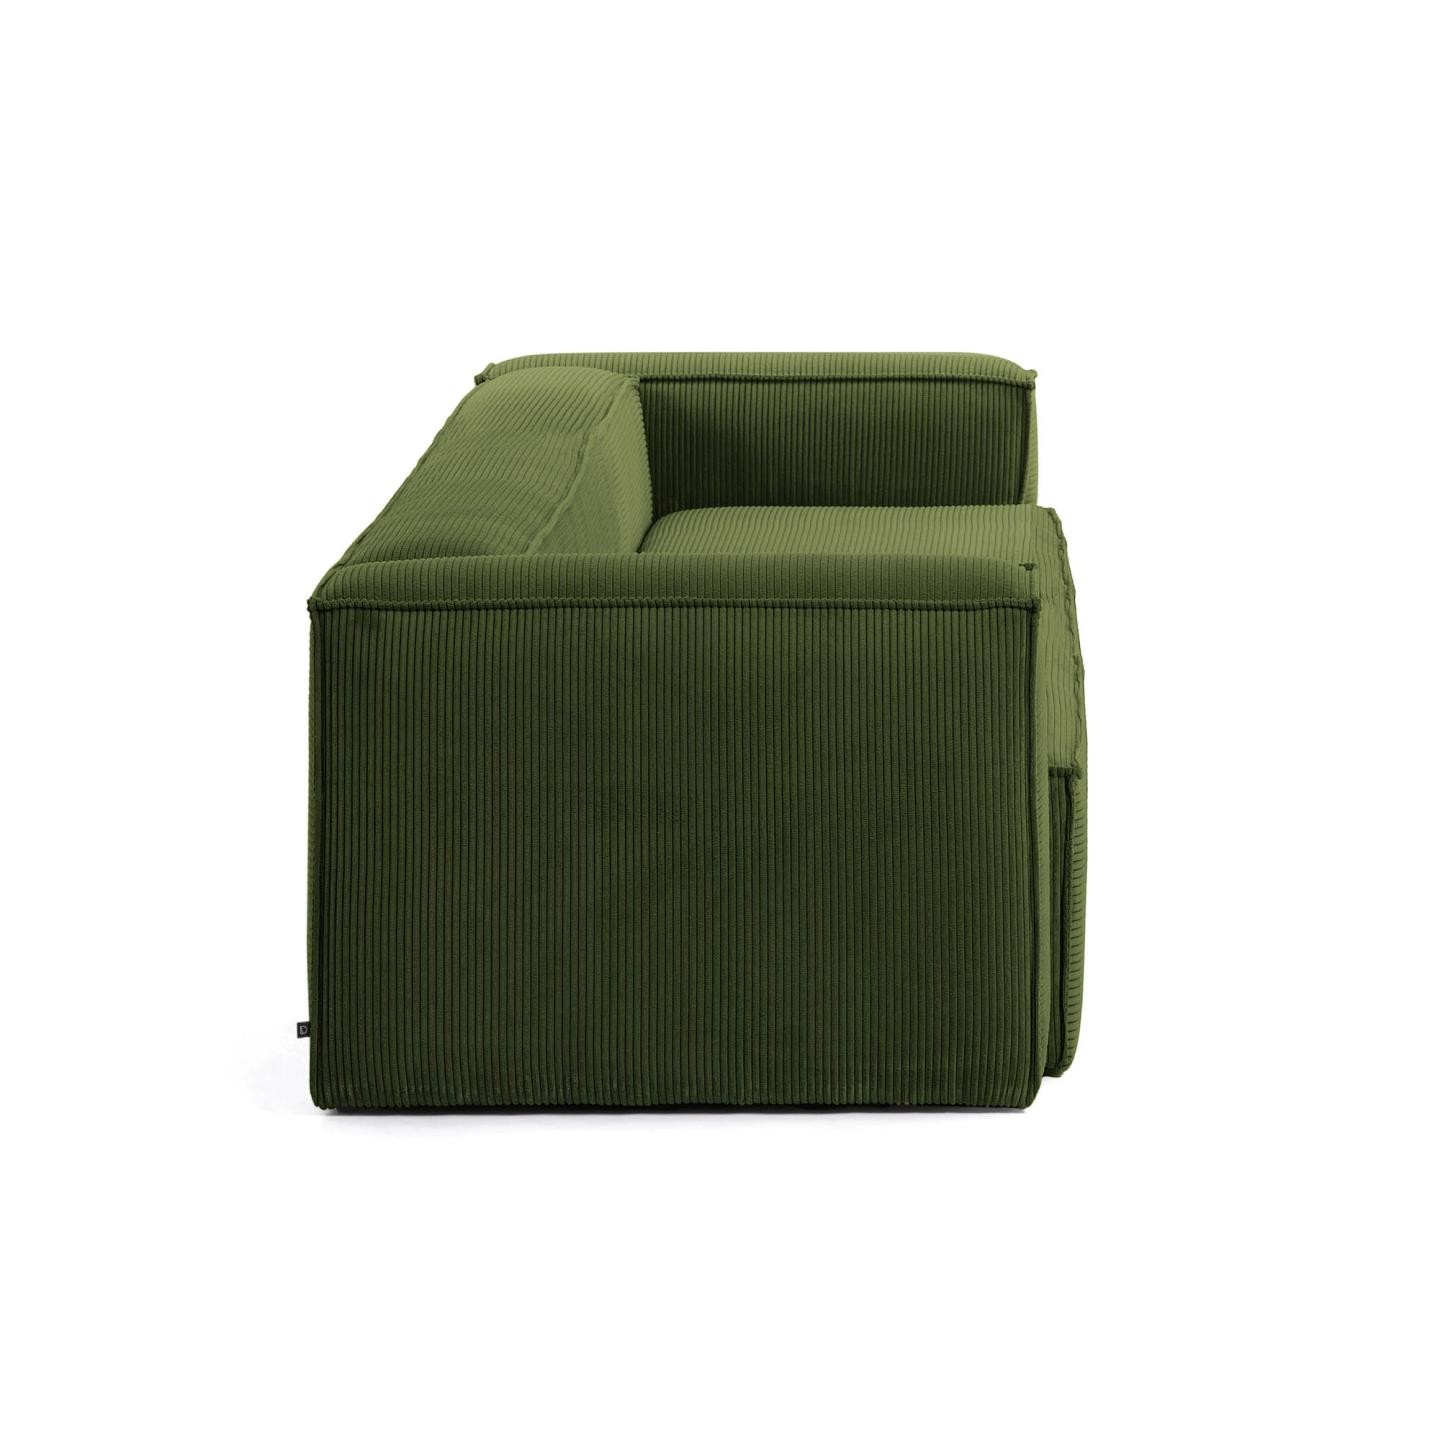 Sofa Blok 3-osobowa, zielona